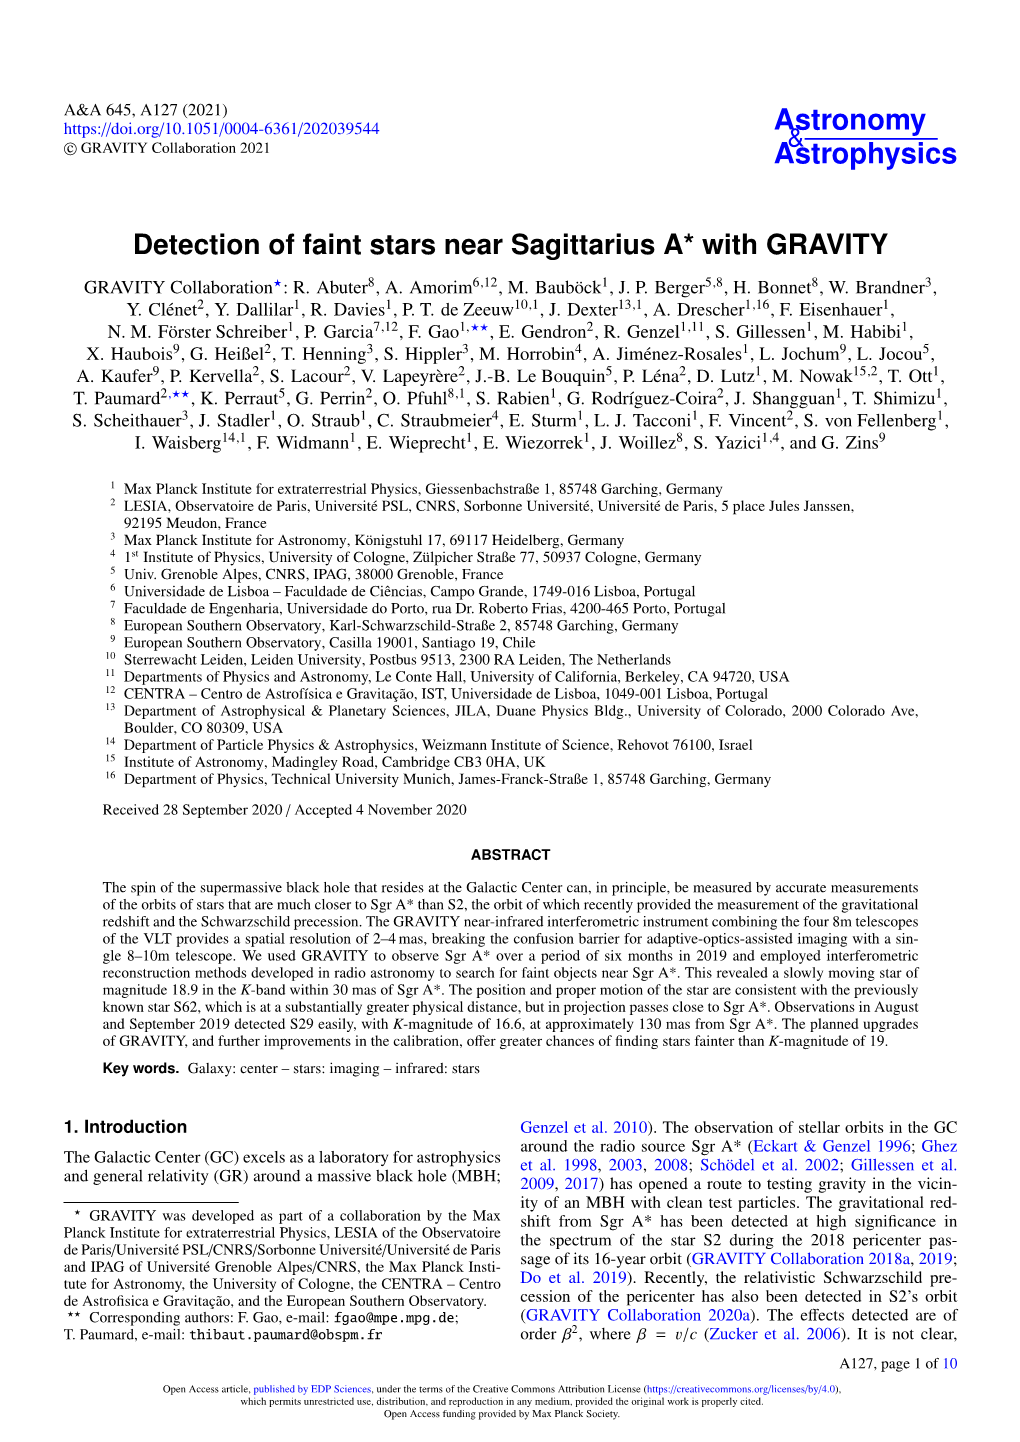 Detection of Faint Stars Near Sagittarius A* with GRAVITY GRAVITY Collaboration?: R